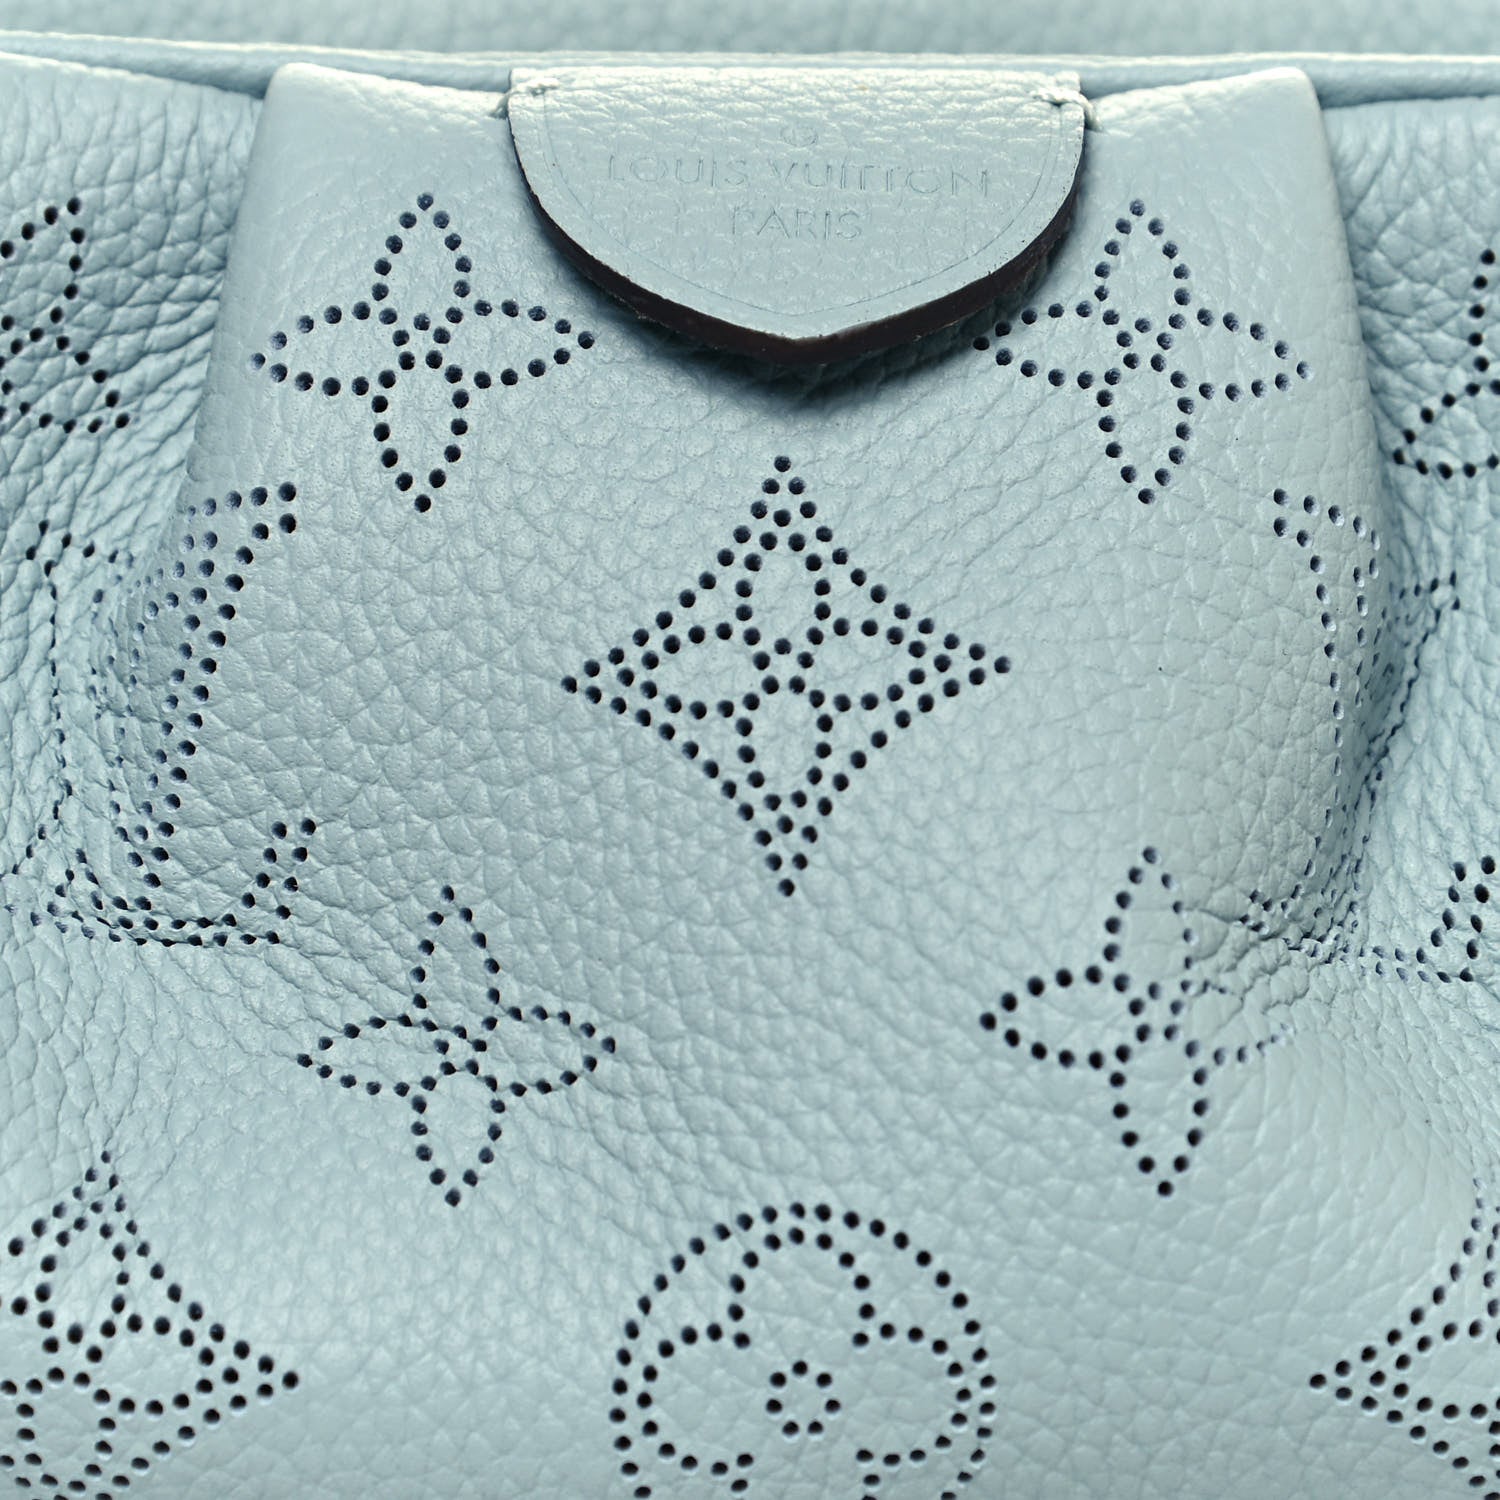 Louis Vuitton Purse Shopping fashion & style Mod Shots_Scala Mini